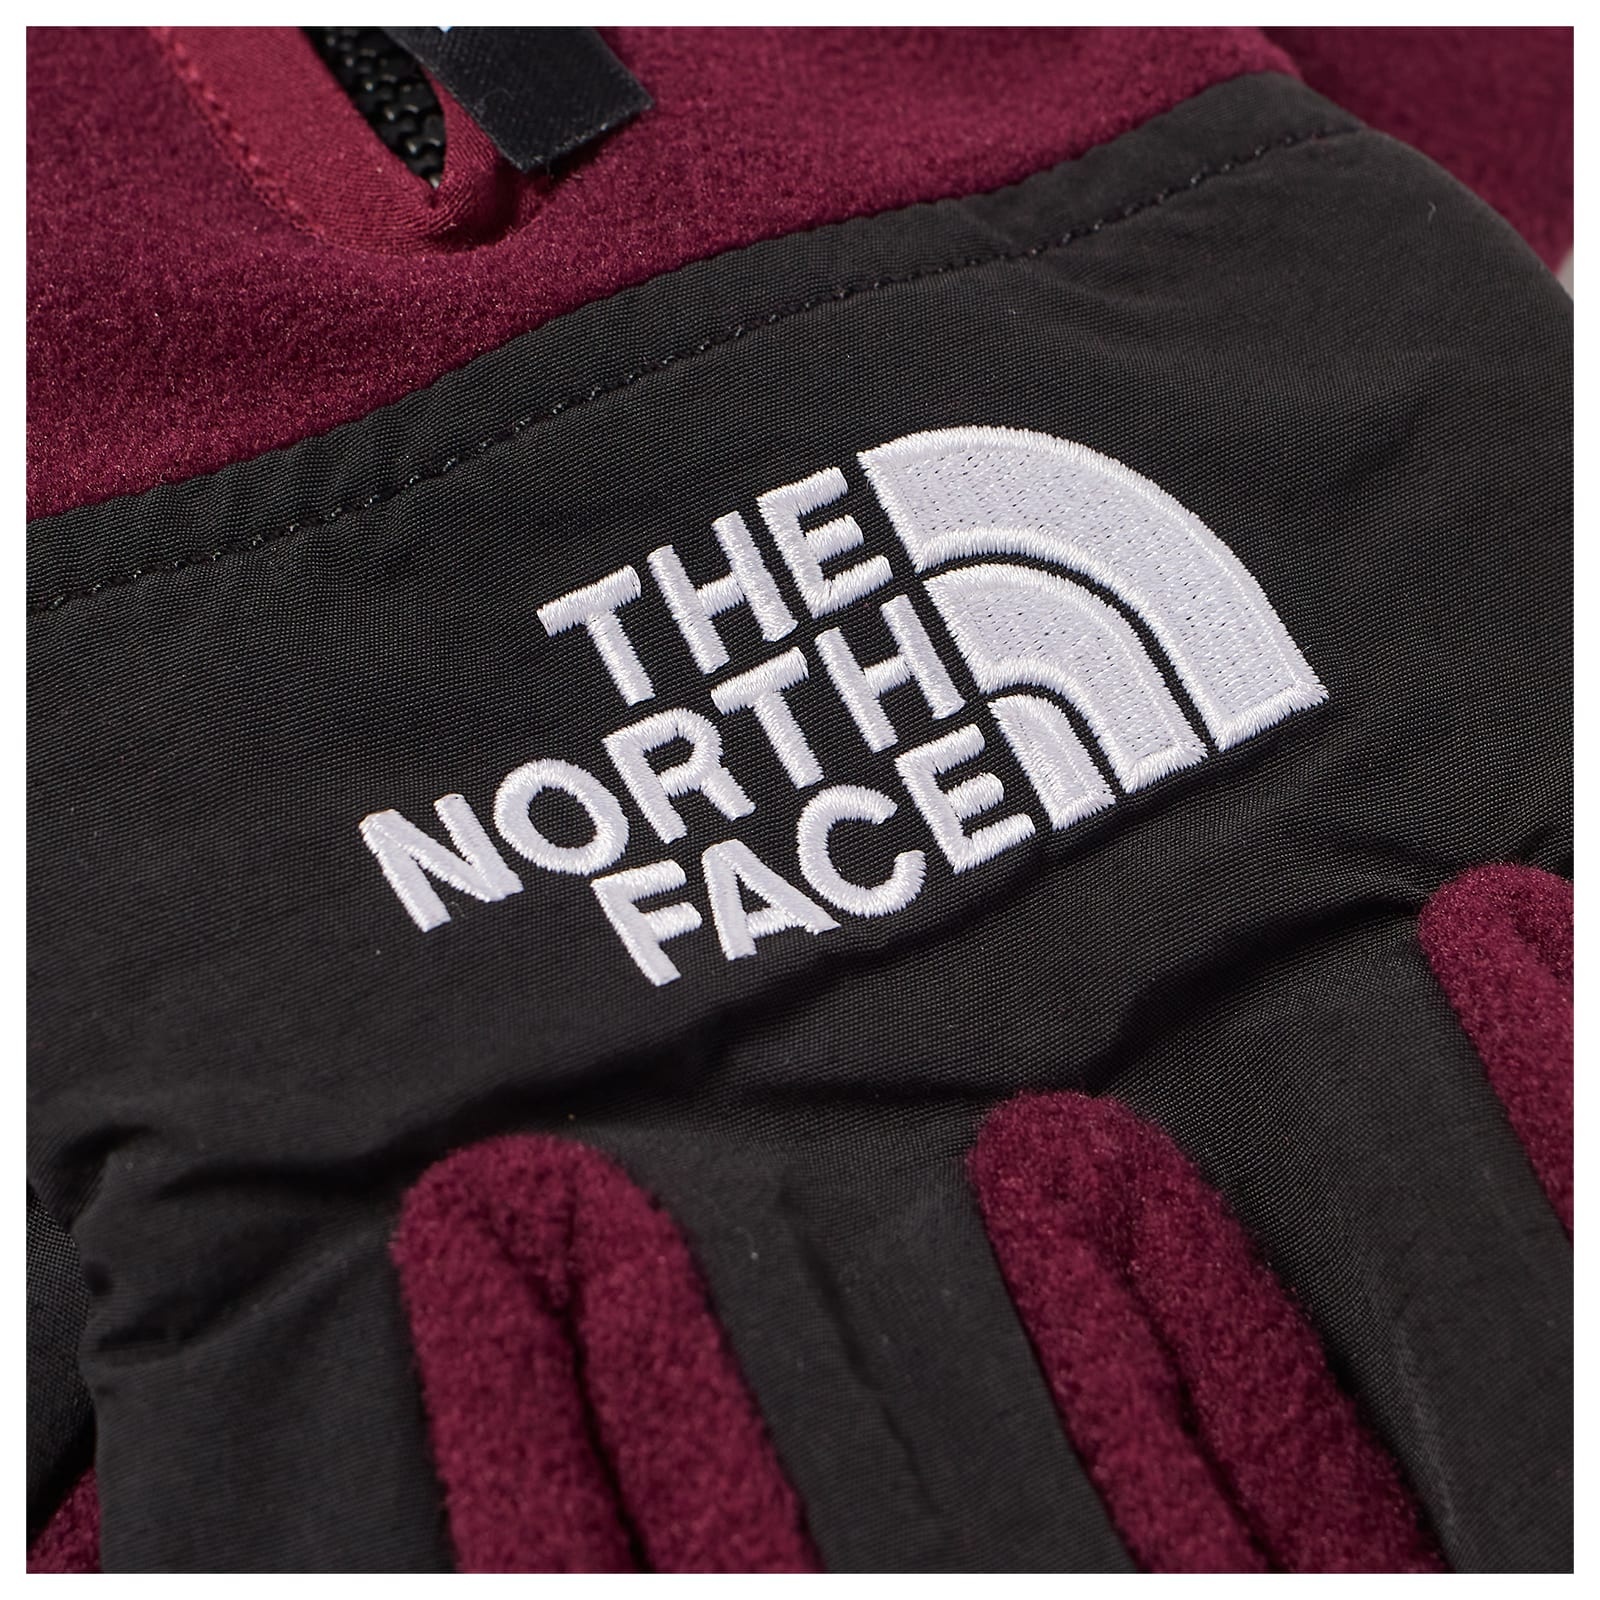 The North Face Denali E-Tip Glove - 2